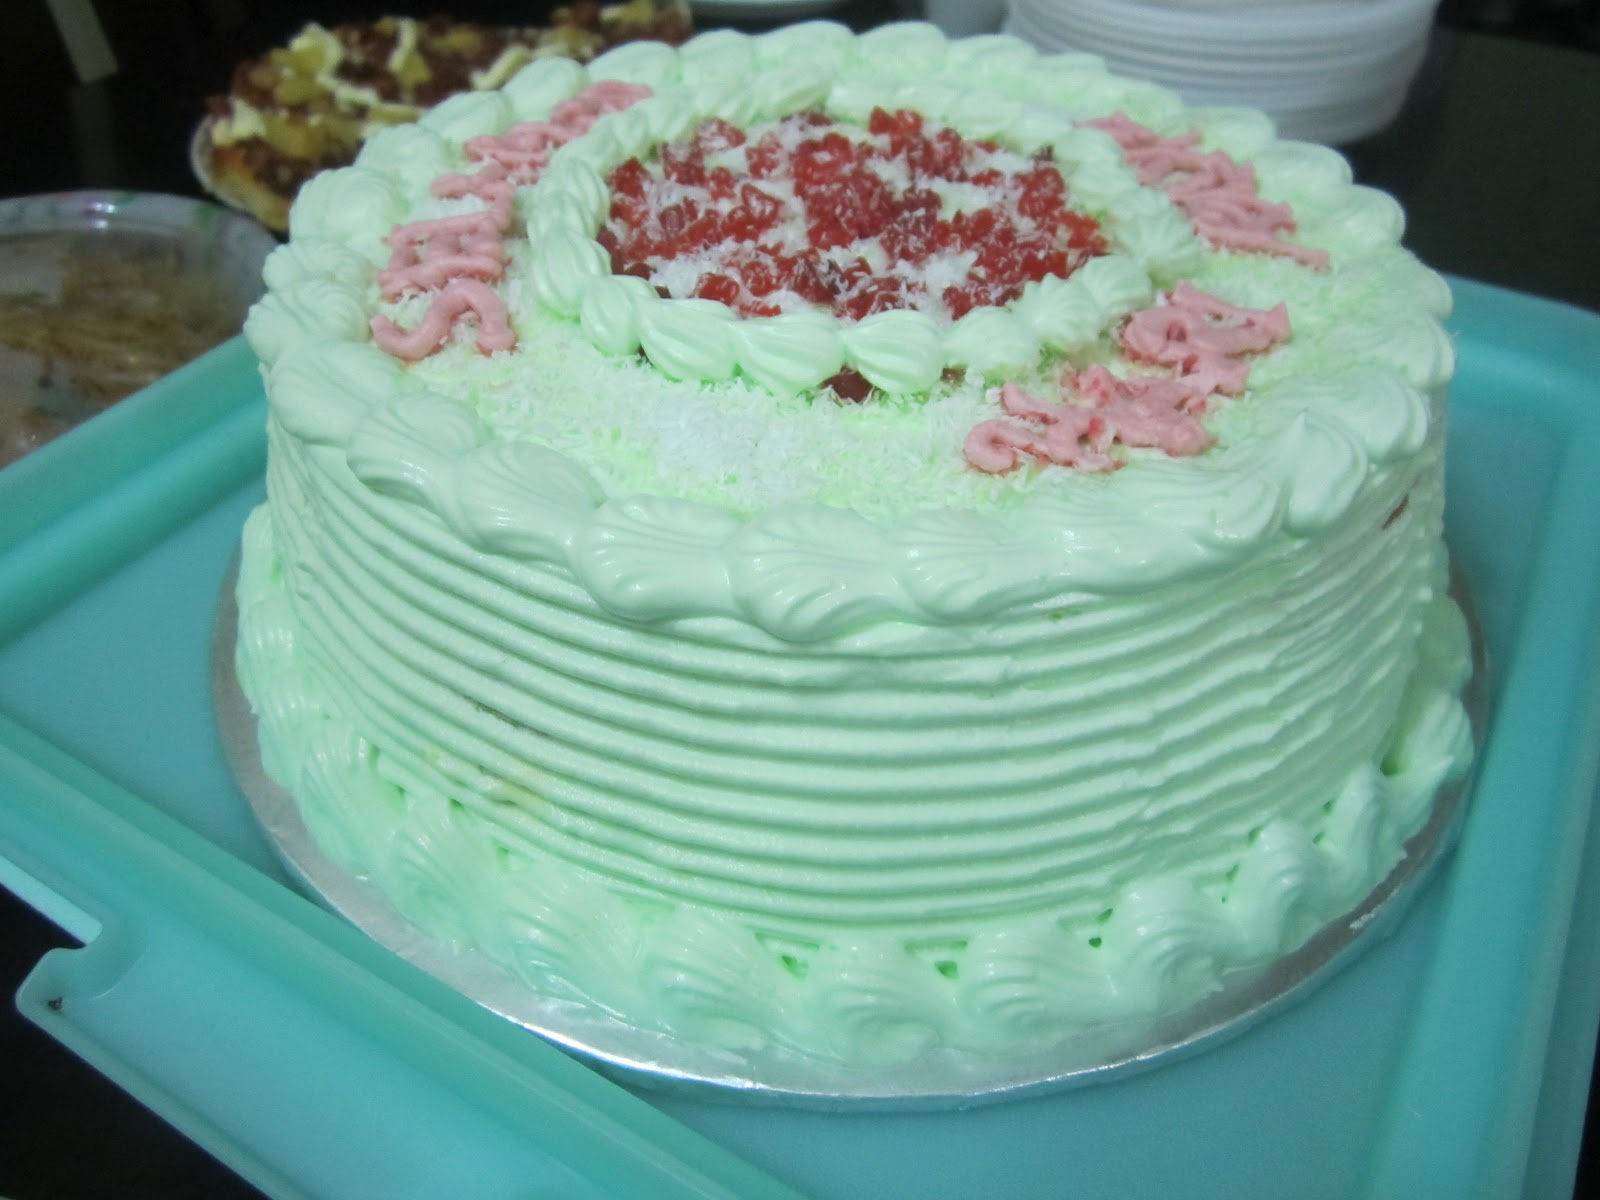 D' Attic Cake: Pandan Layer Sponge Cake with Pudding Mix